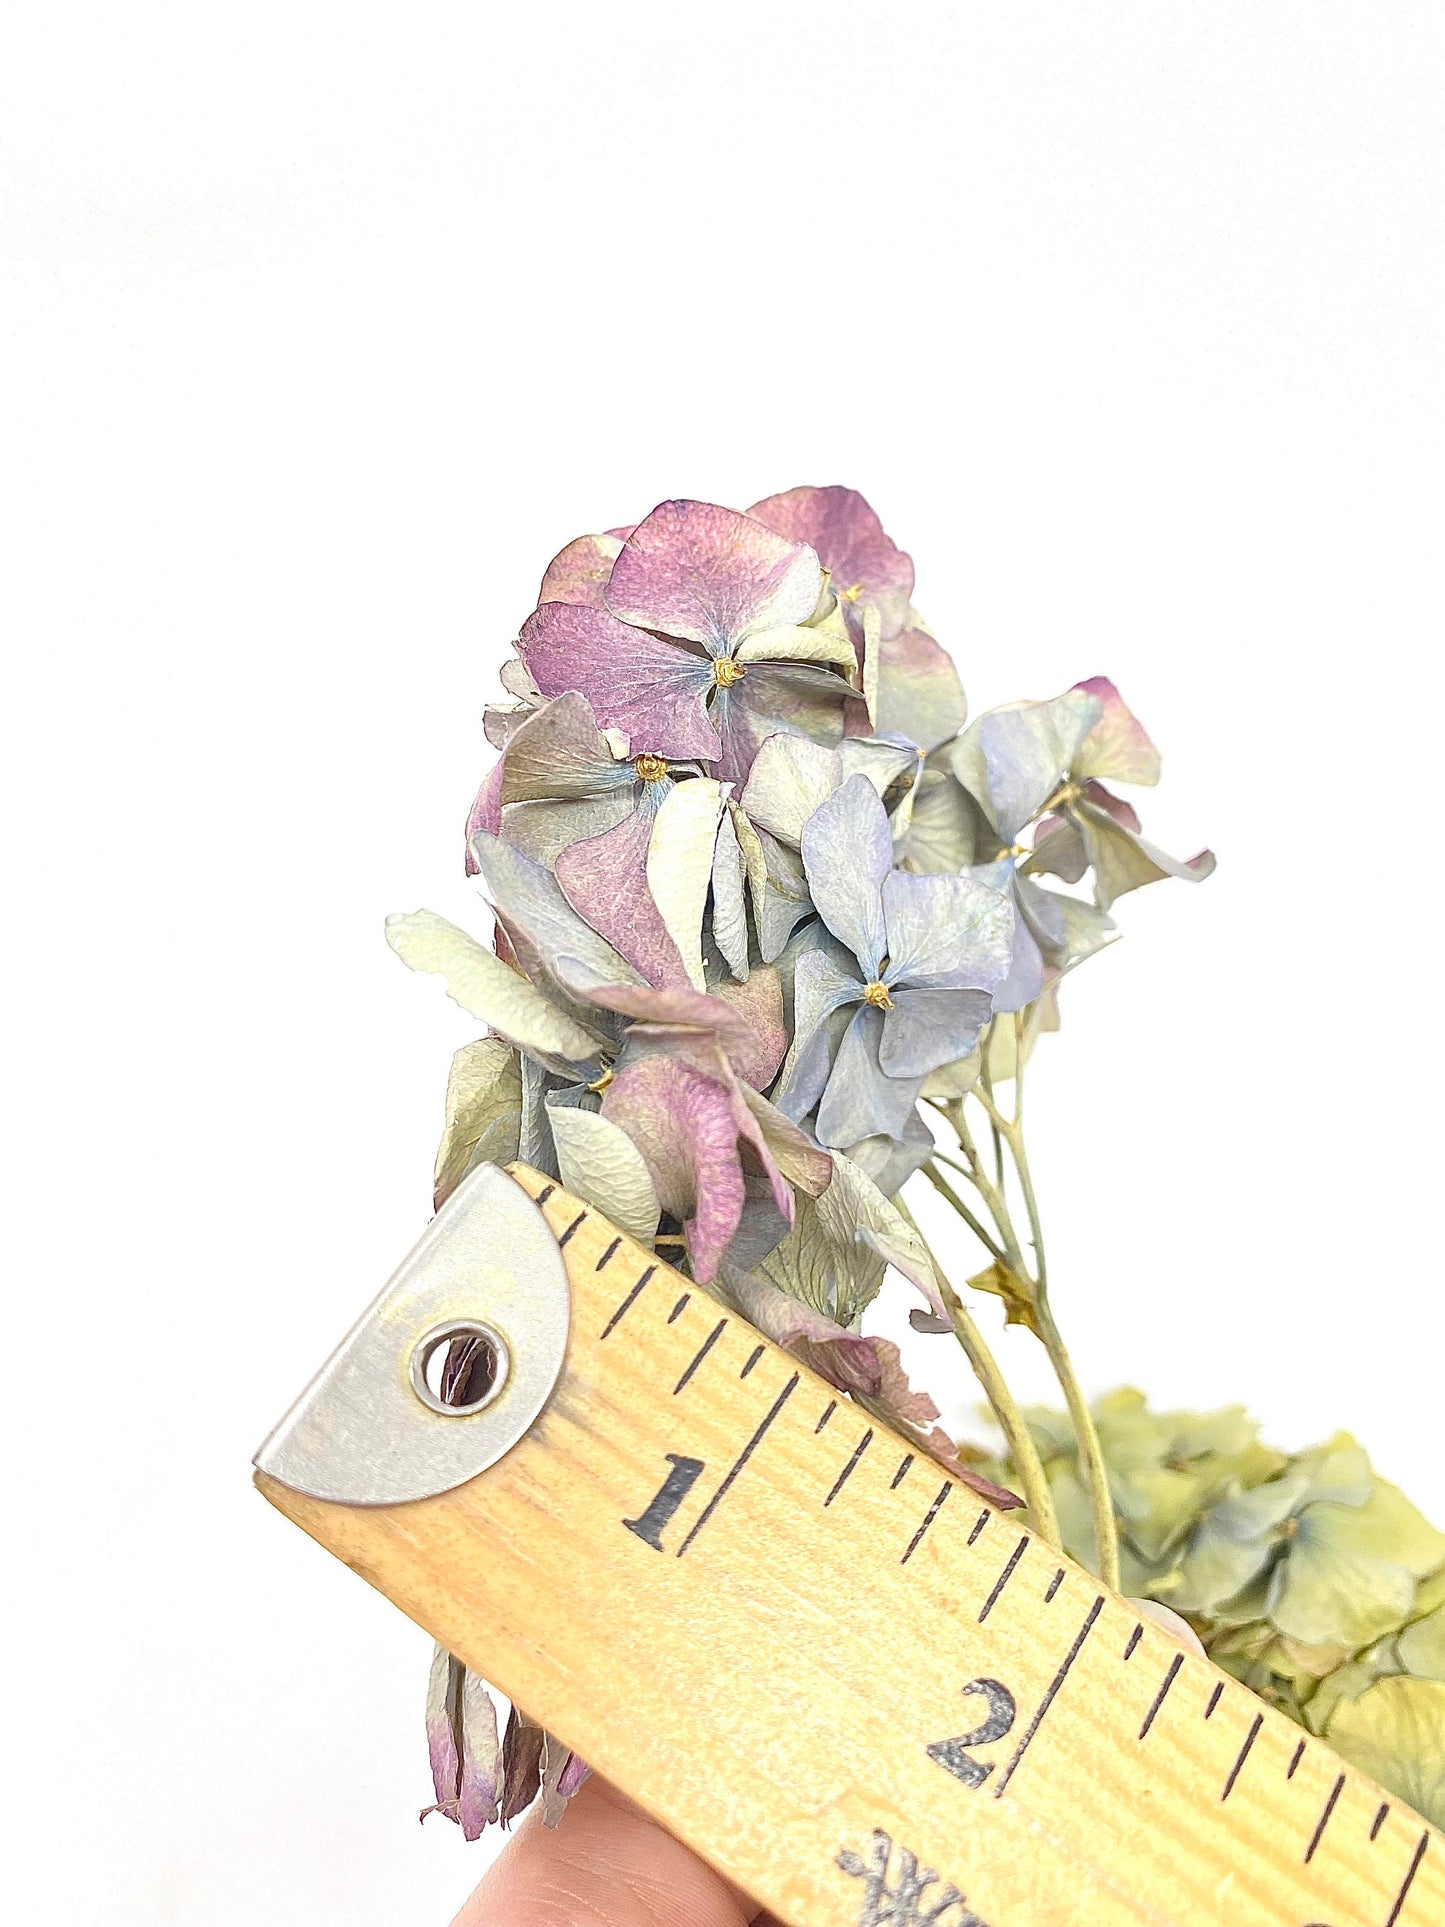 Dried Hydrangea Flat Heads, Stemless hydrangea, Dry Flowers, Blue, Green, Purple, Natural, Wedding, Bouquet, Bridal, DIY, Photo Promps, Mix